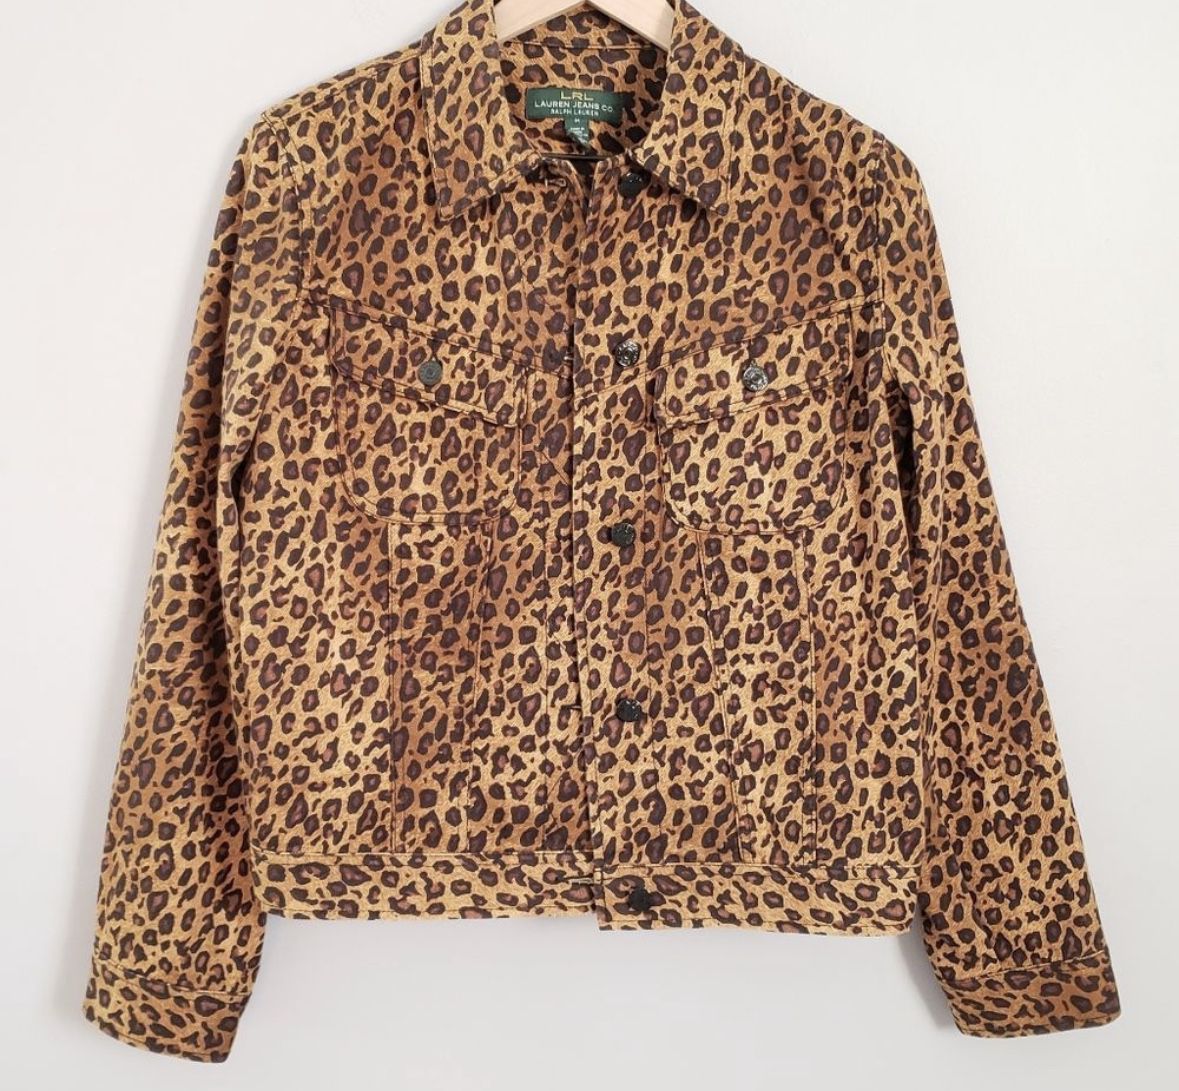 Size M Ralph Lauren denim jacket $30